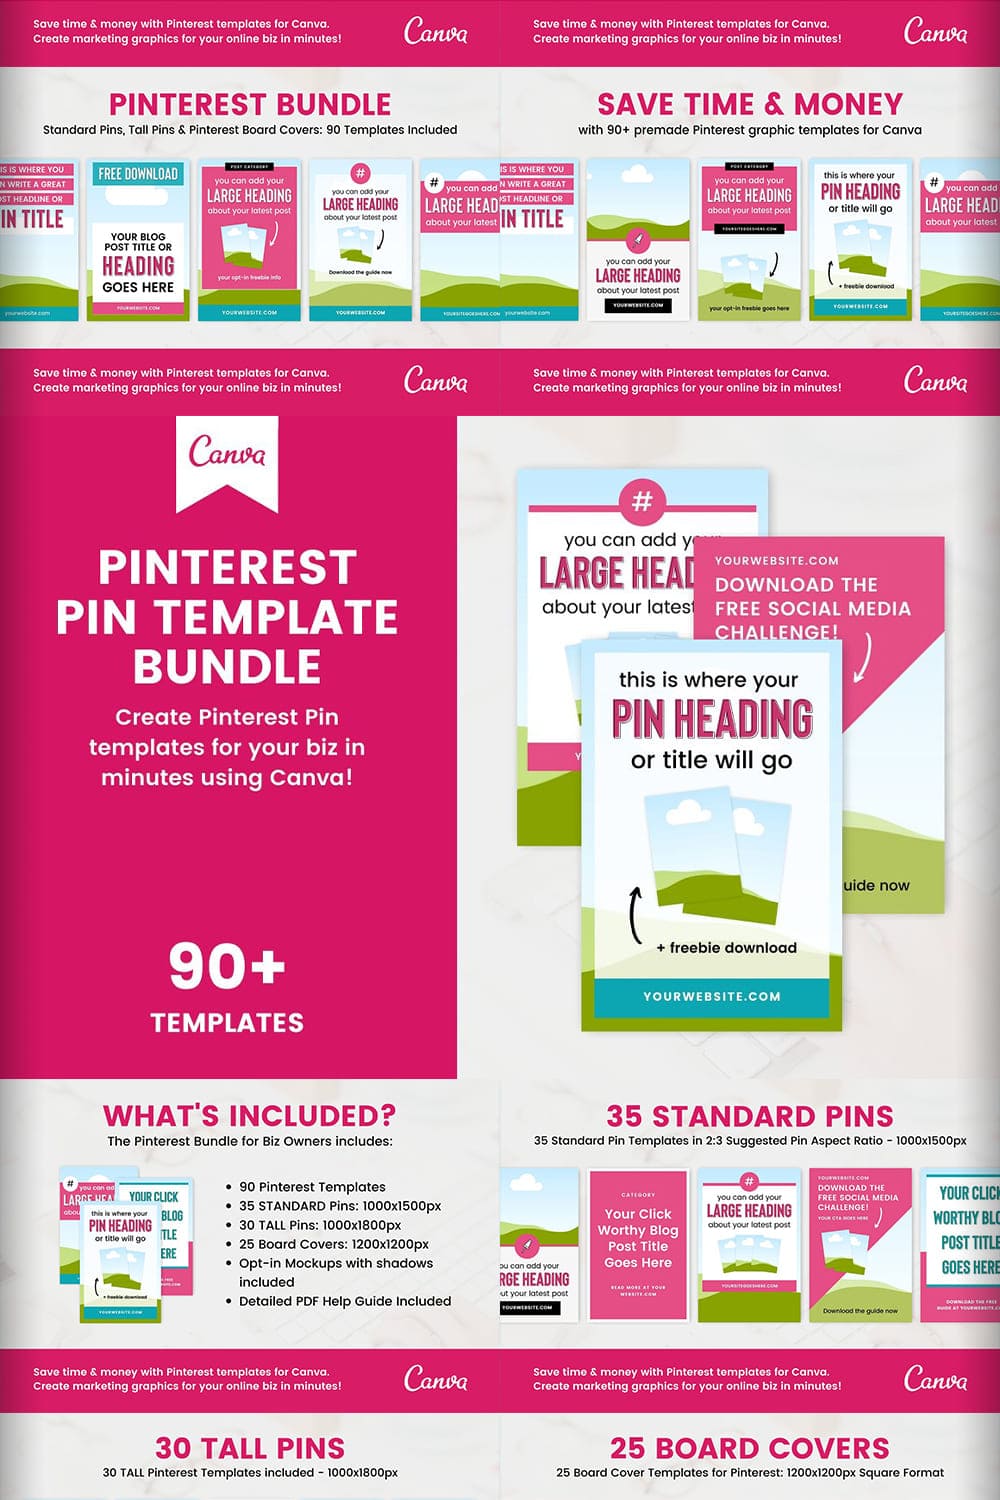 Pinterest Pin Template Bundle - "Save Time & Money!".